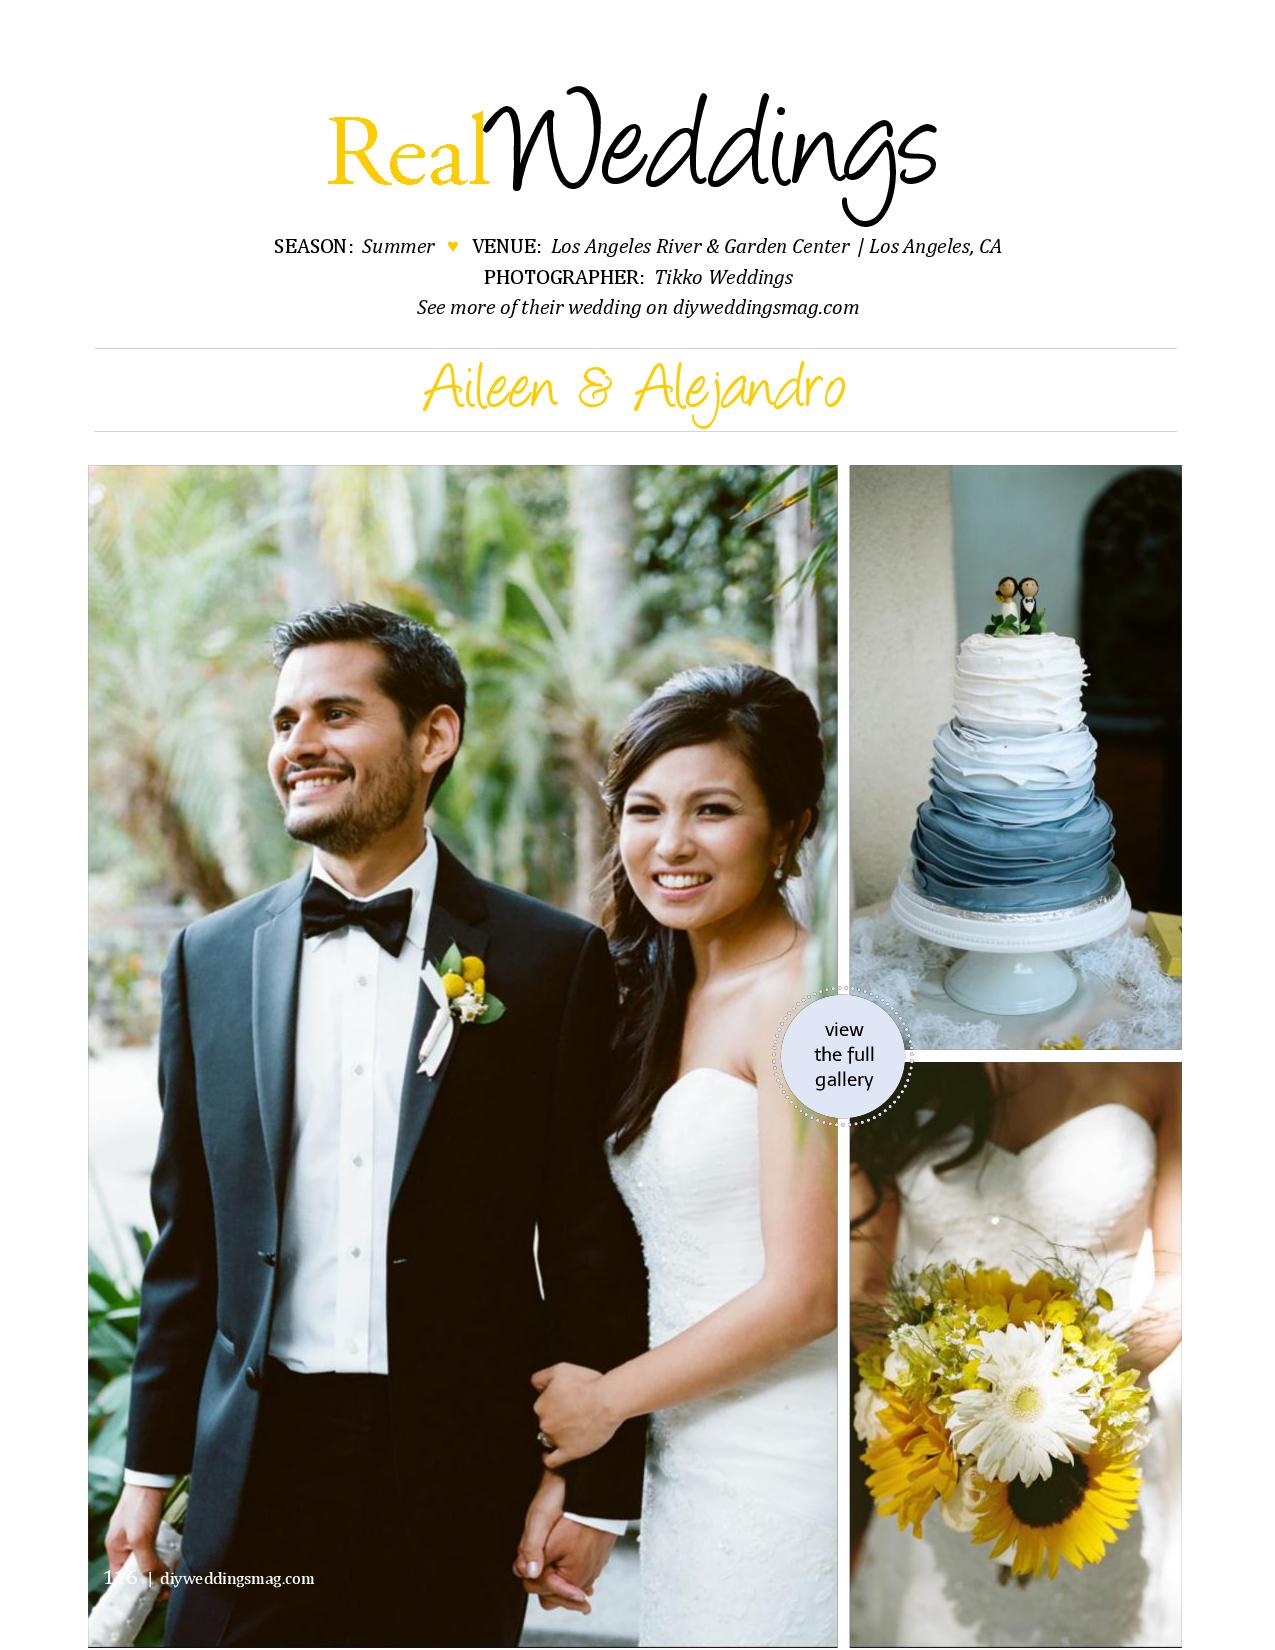 Aileen & Alejandro-DIY Weddings Mag-page-001.jpg